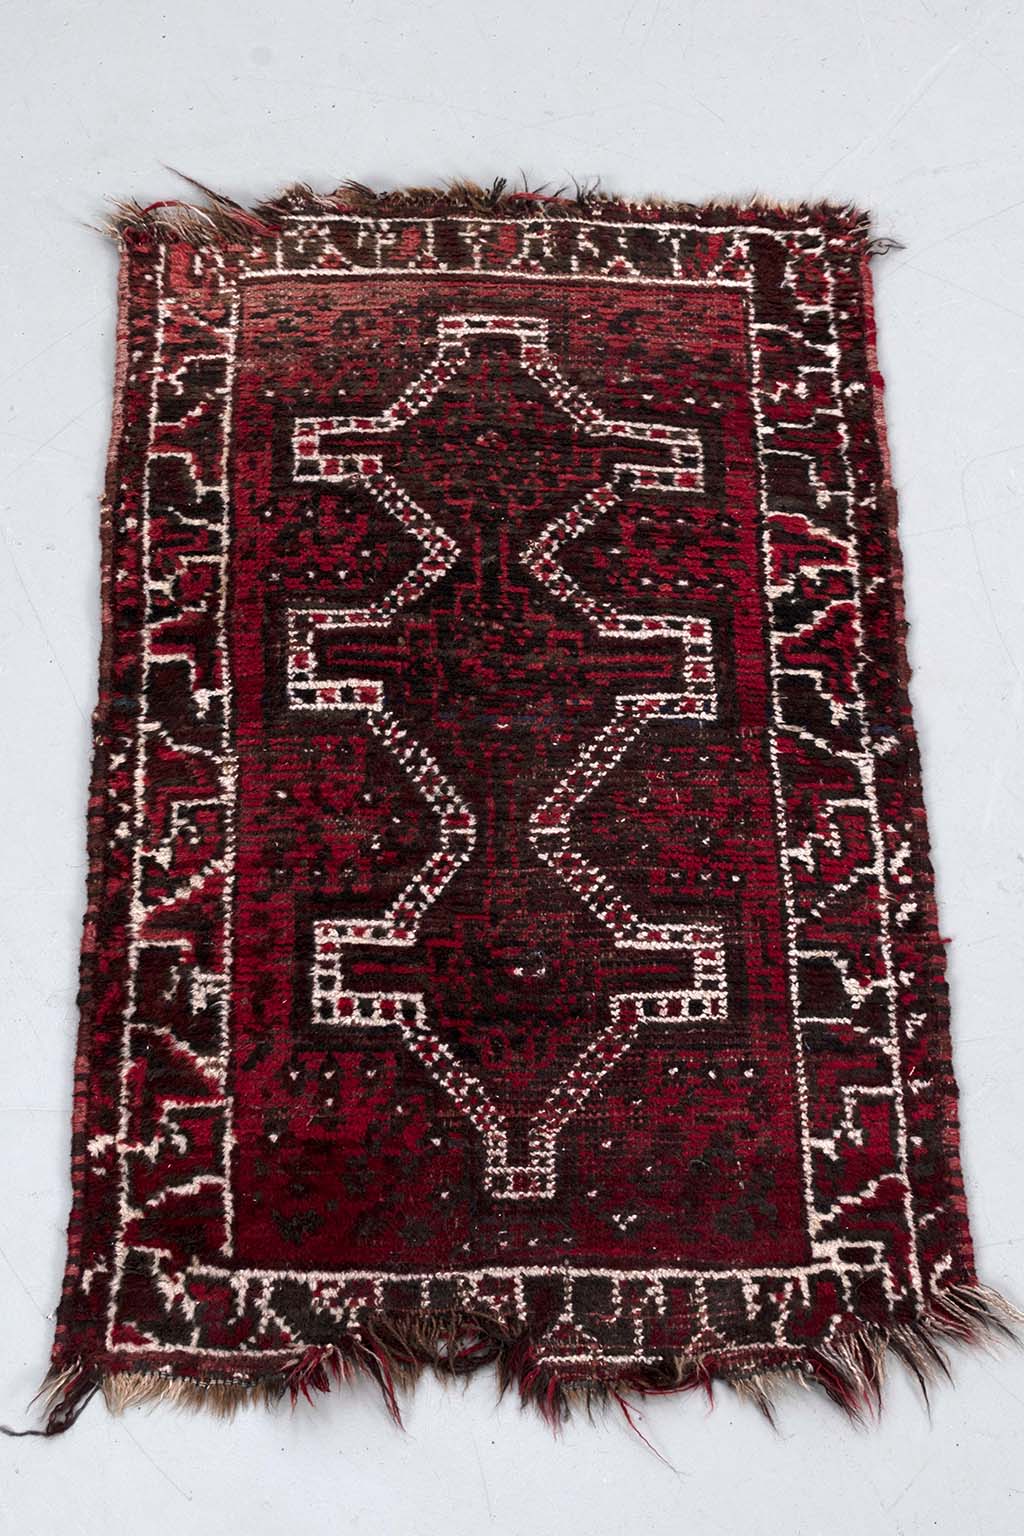 Eastern rug